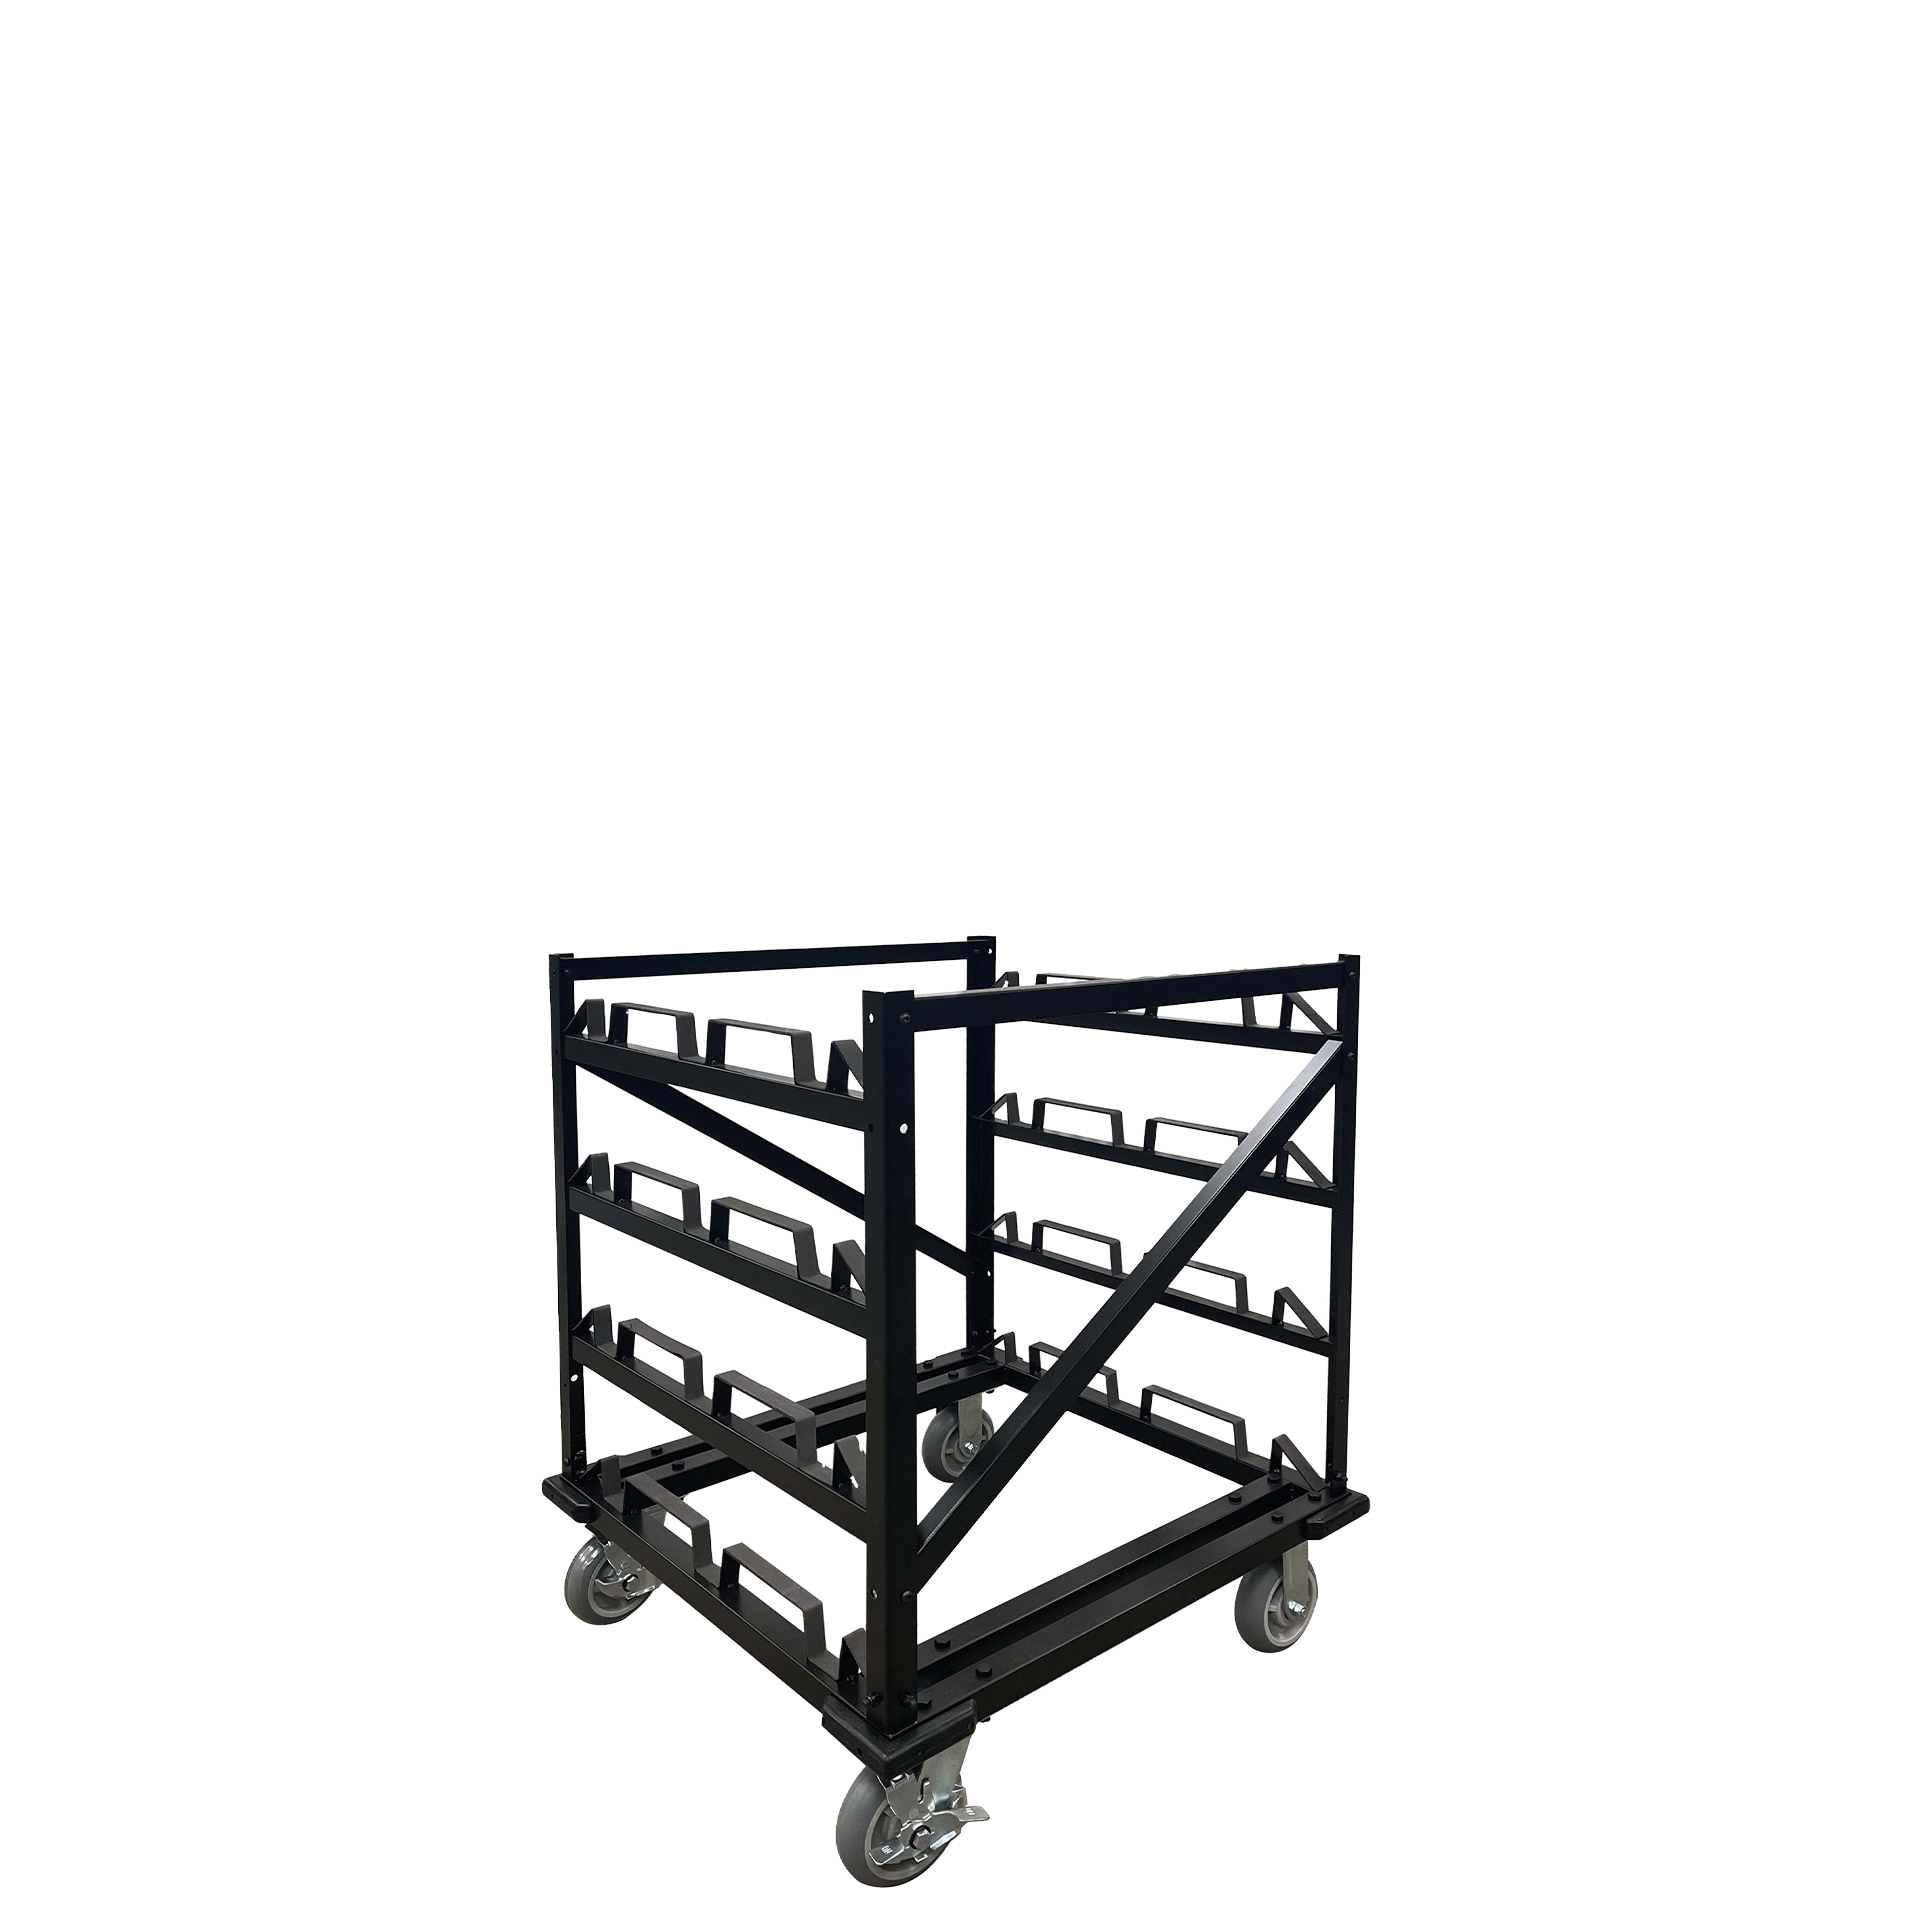 12 Post Horizontal Storage Cart with no tray